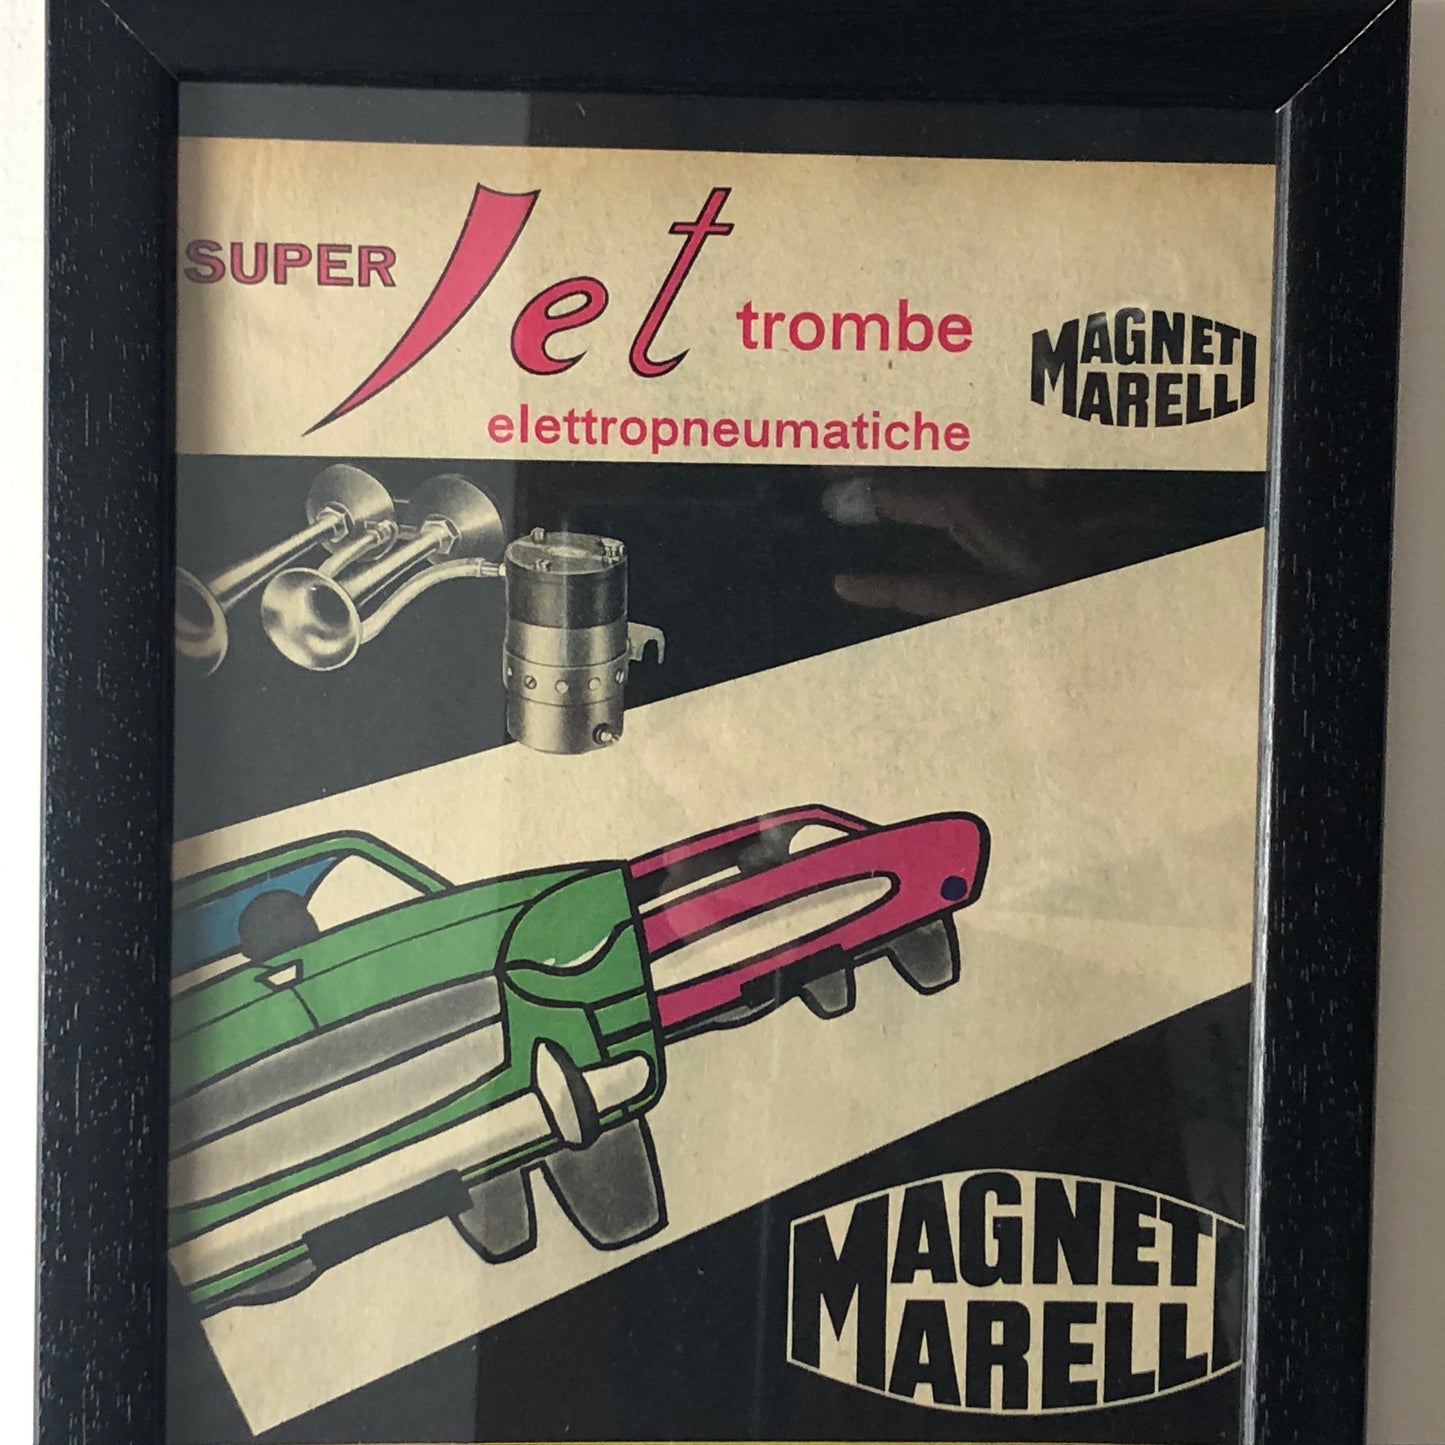 Magneti Marelli, Advertising Year 1960 Magneti Marelli Super Jet Electropneumatic Horns Designed by Studio Dalla Costa.